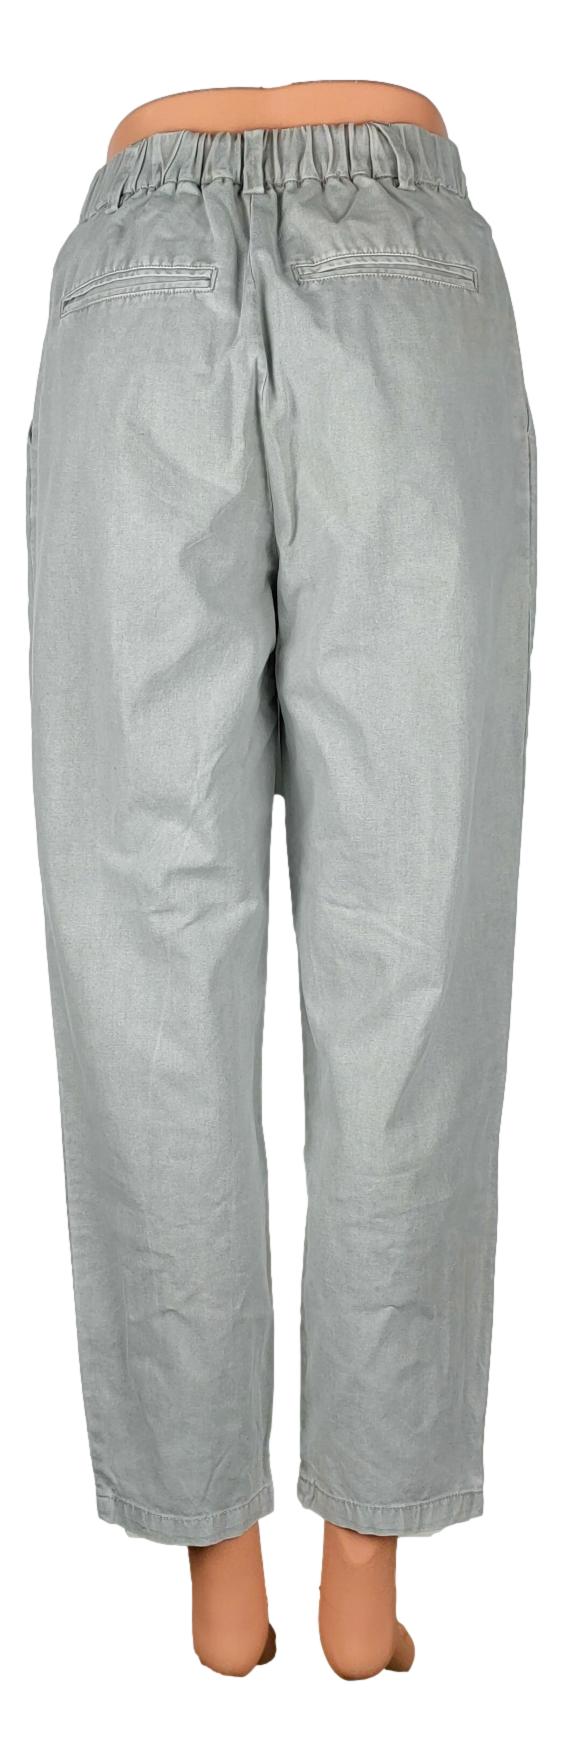 Pantalon Asos - Taille 34